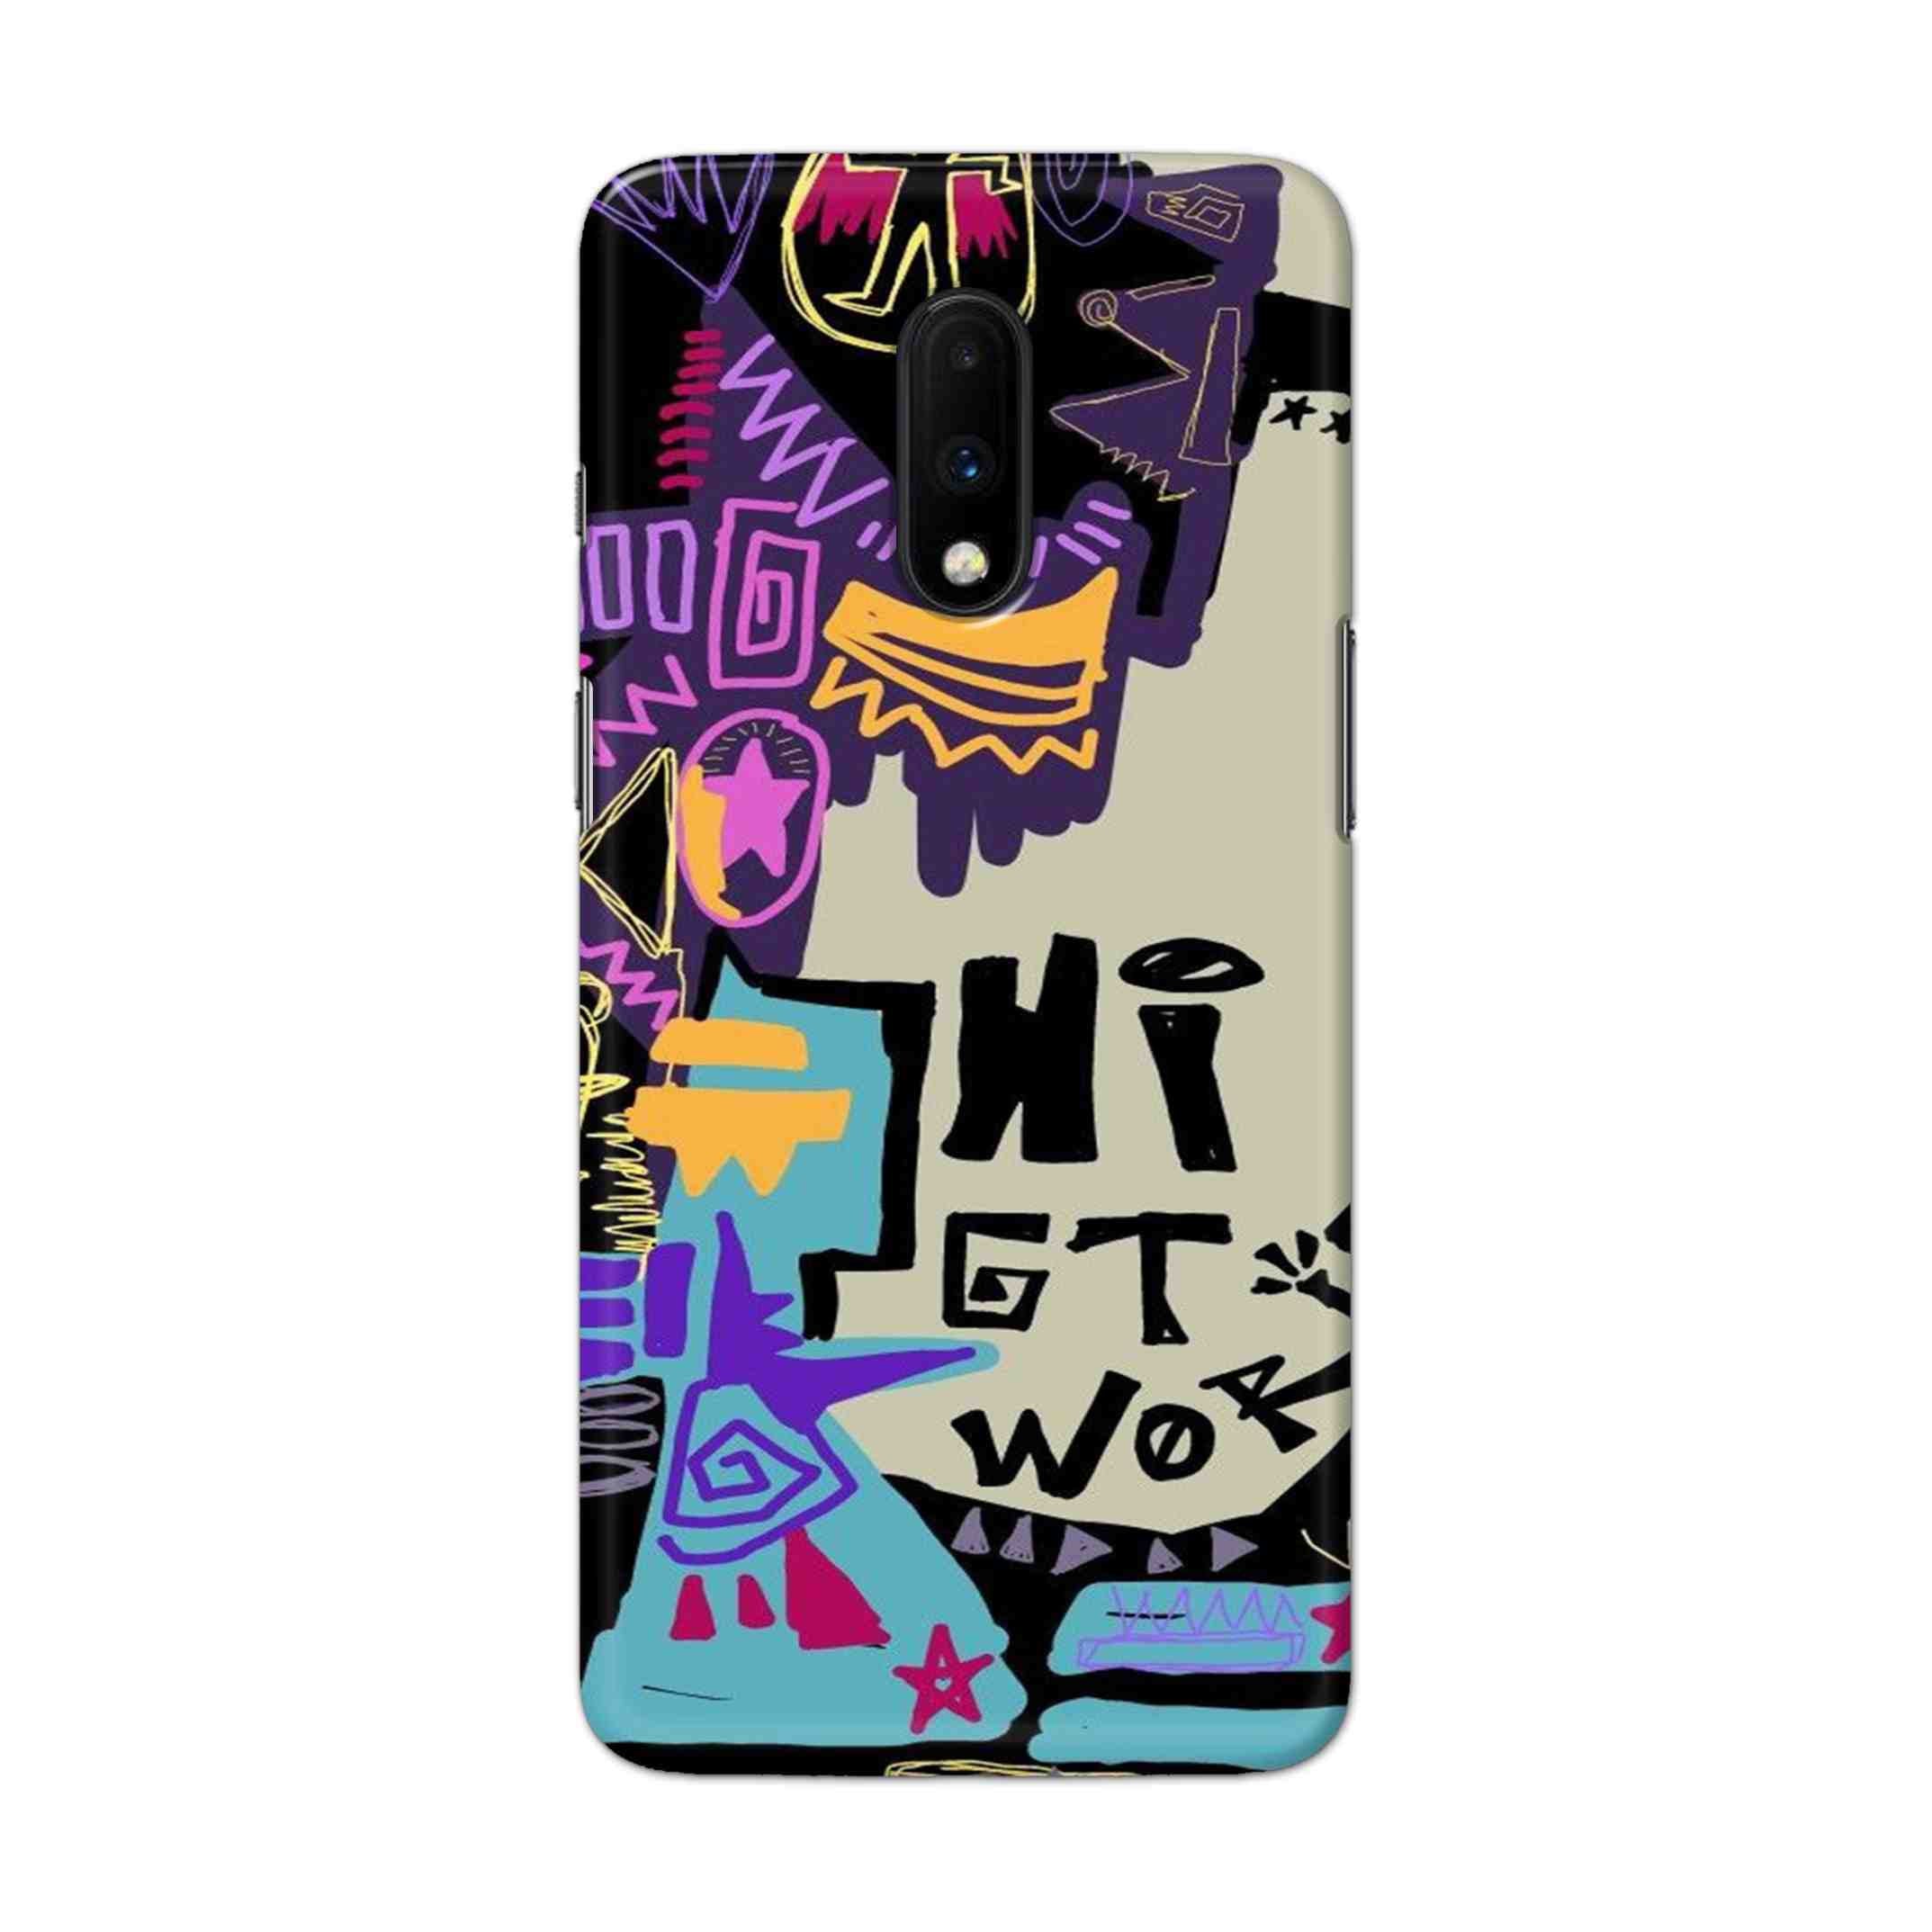 Buy Hi Gt World Hard Back Mobile Phone Case Cover For OnePlus 7 Online